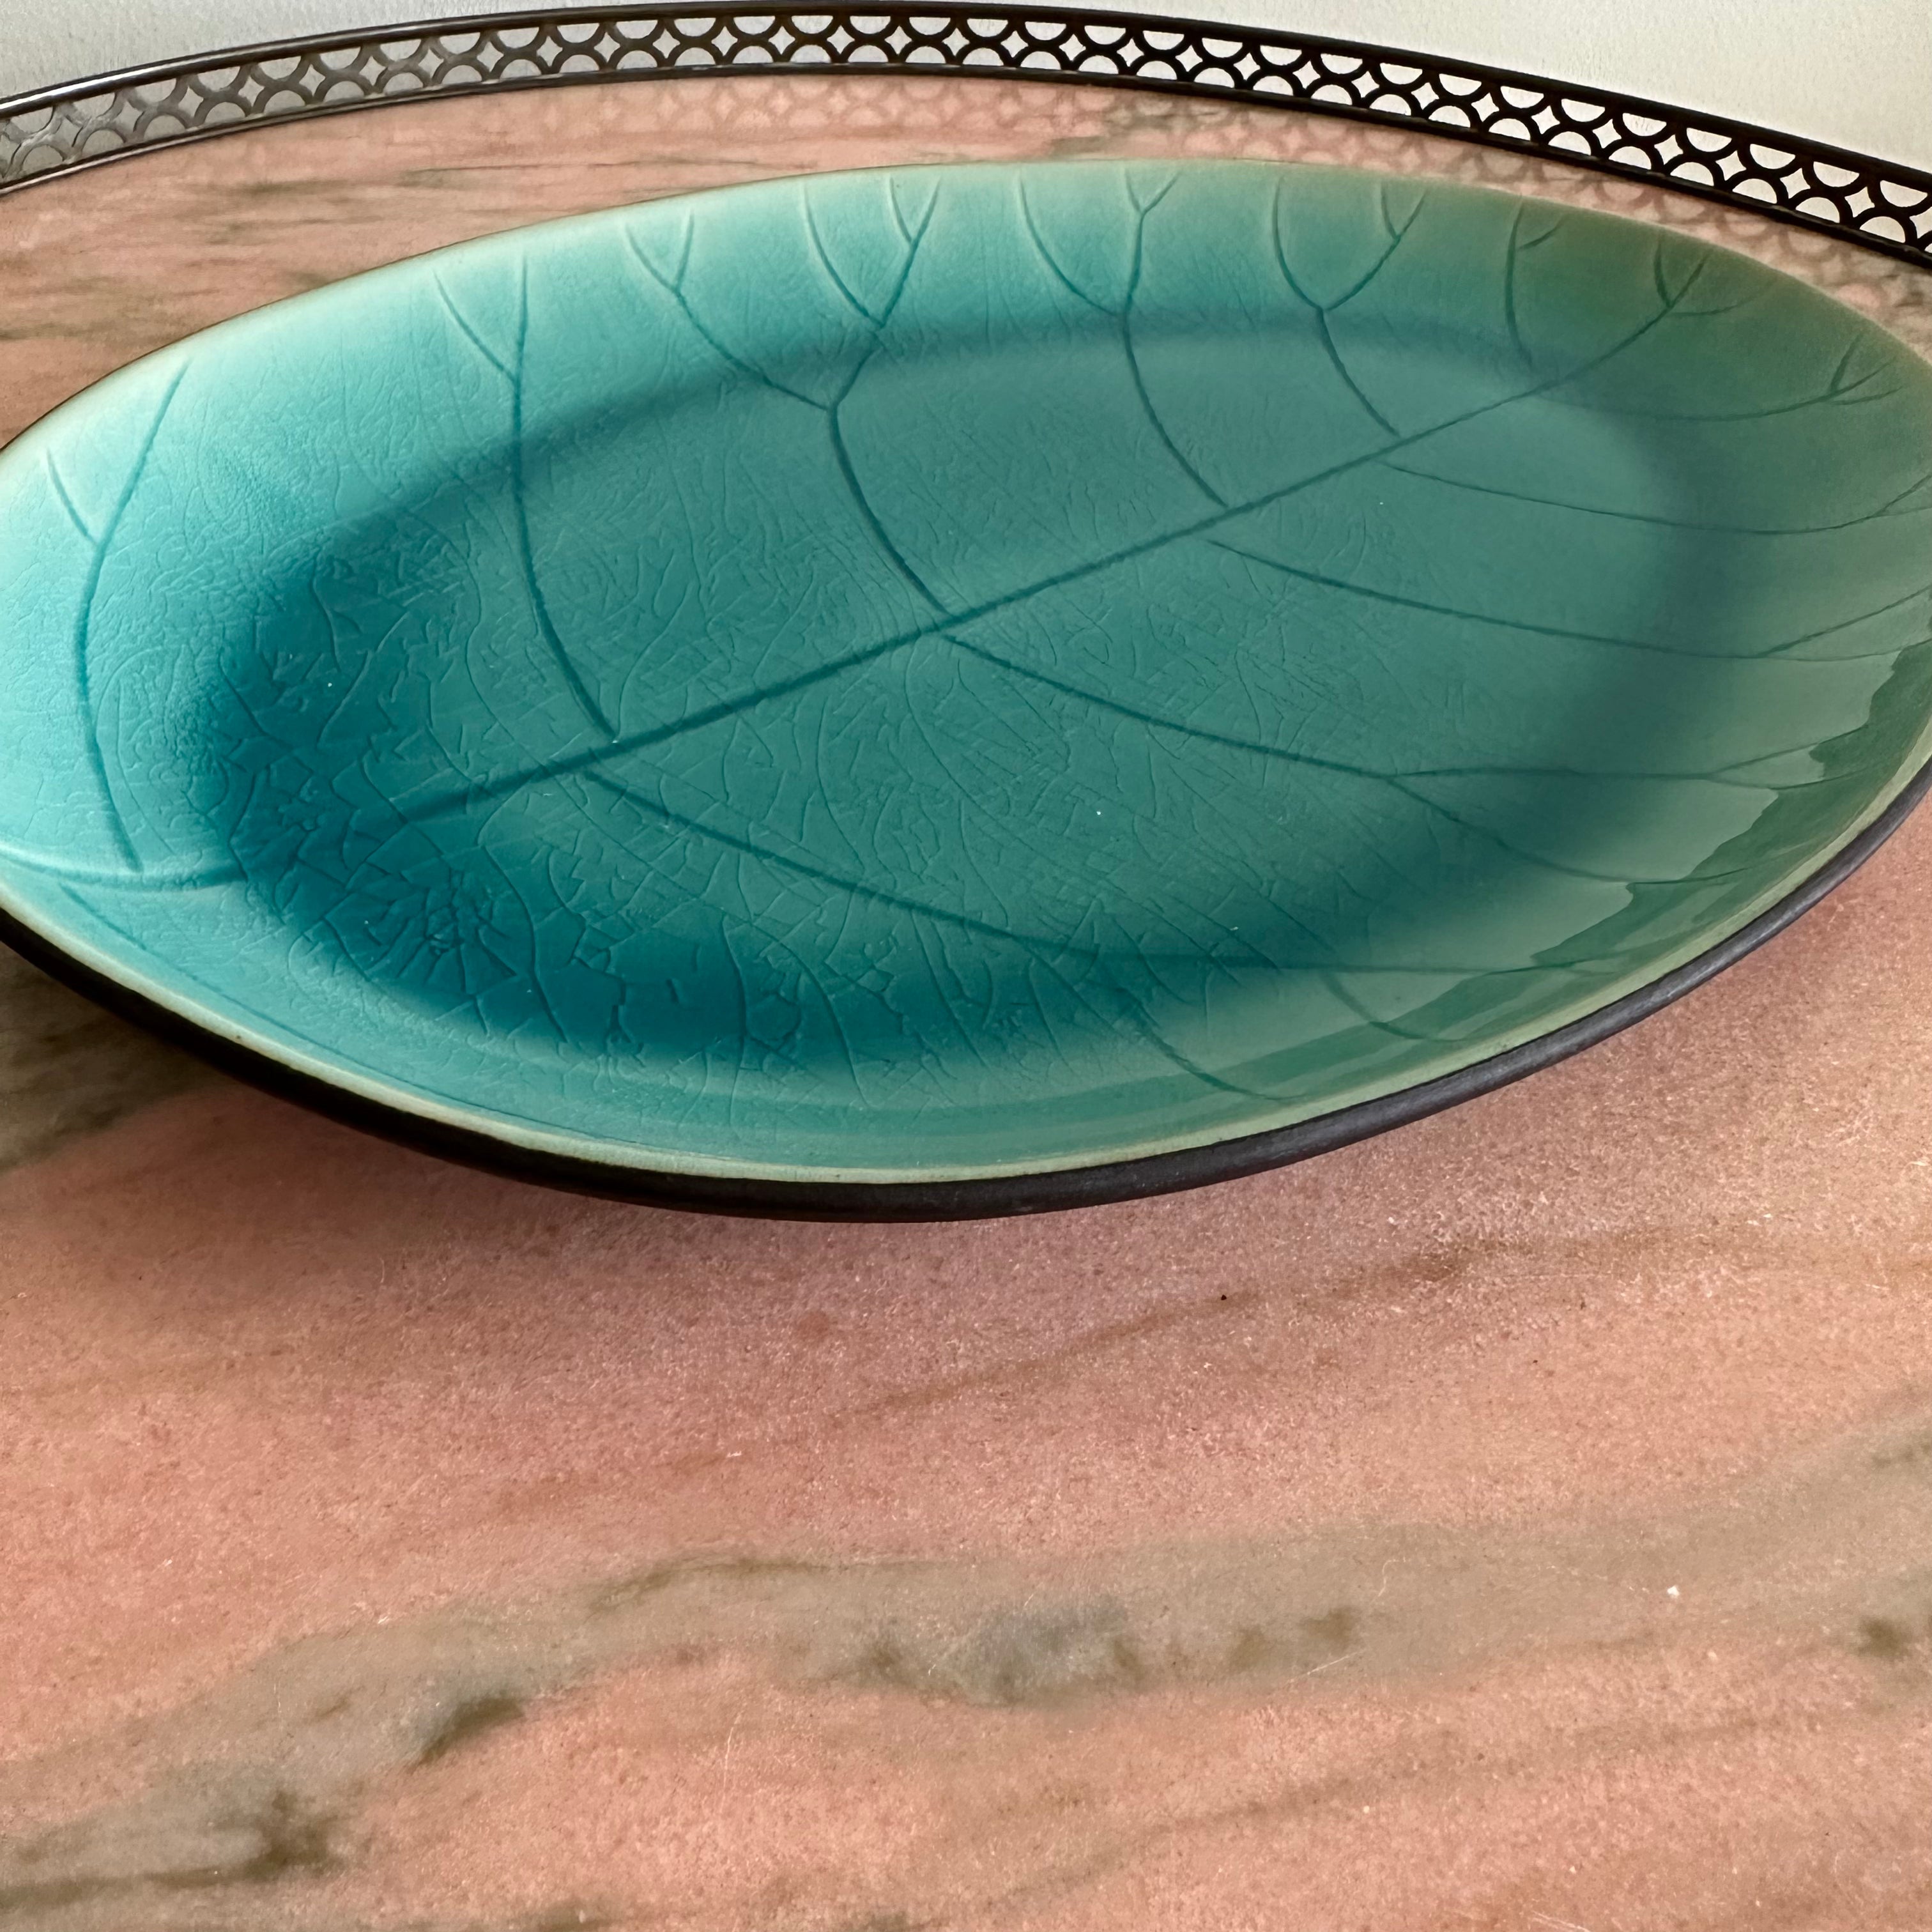 Turquoise cracked platter